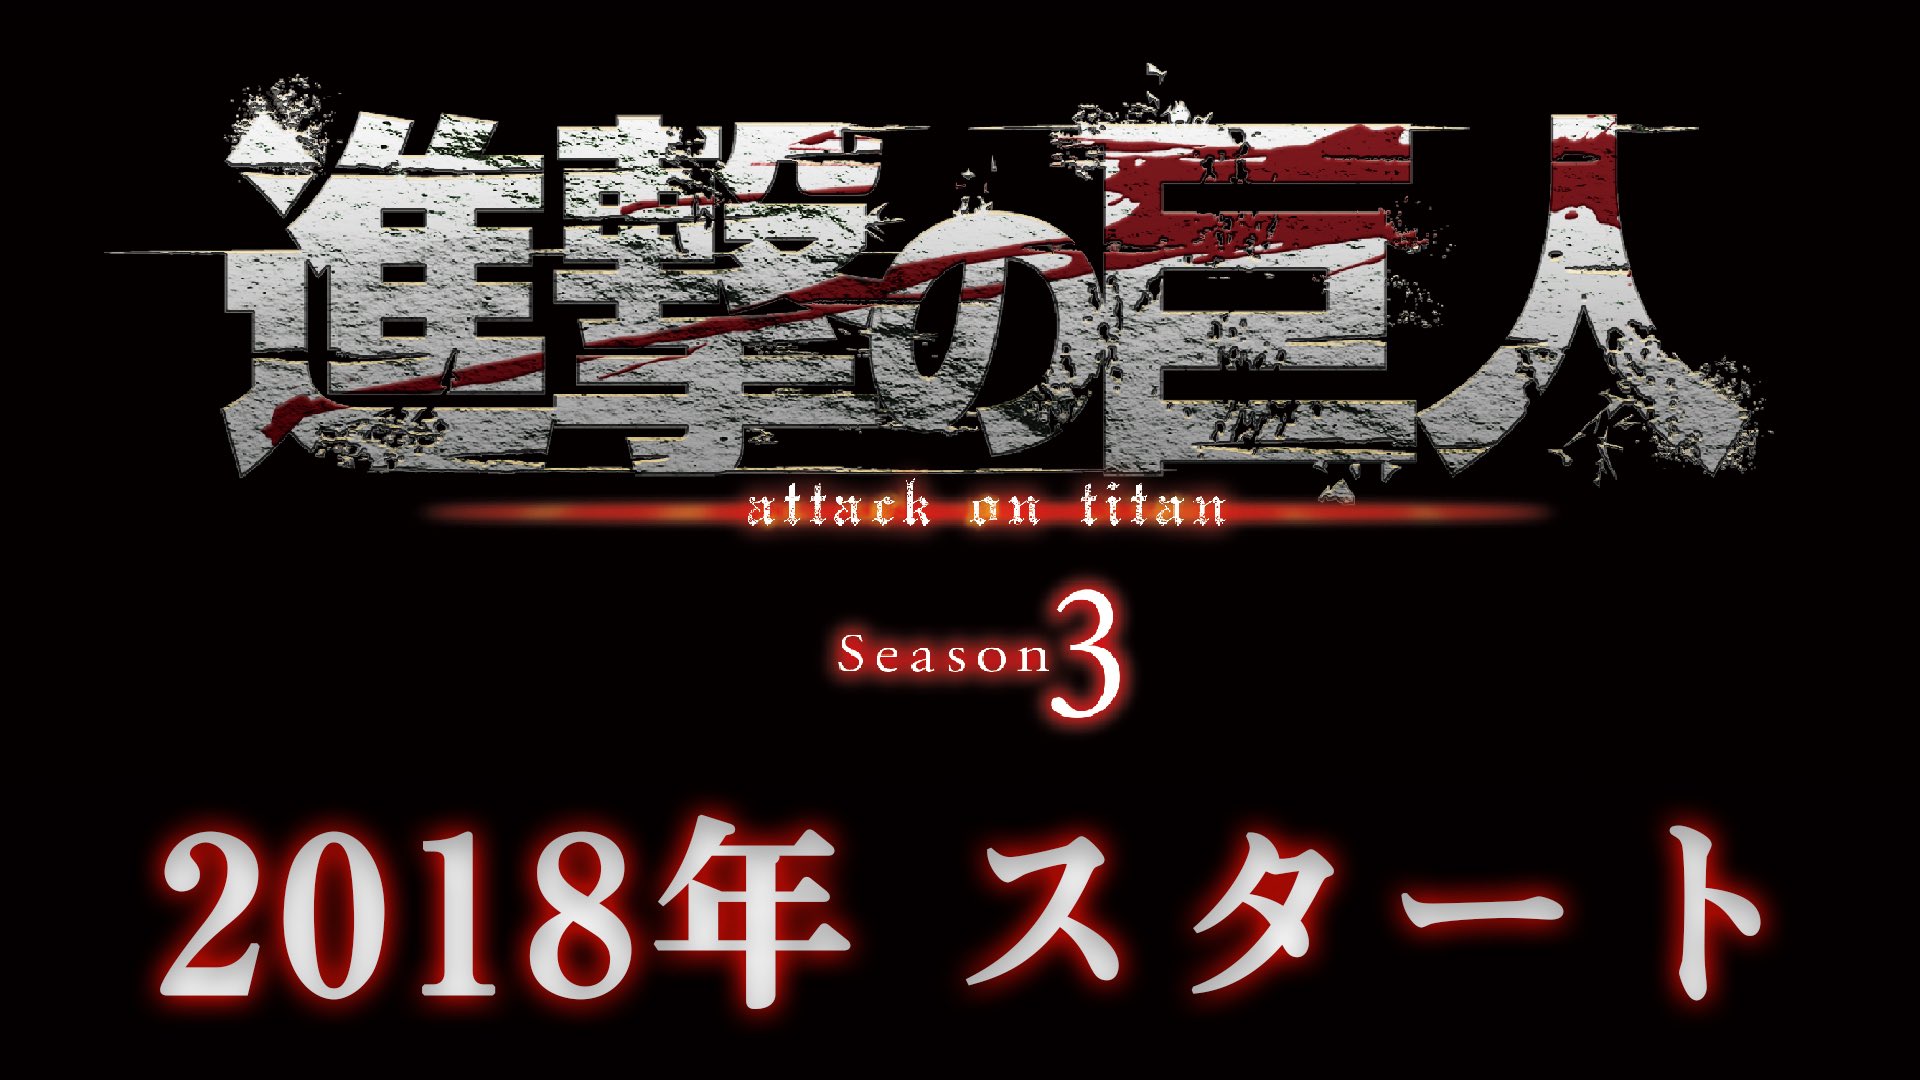 Shingeki no Kyojin Season 3 (Attack on Titan Season 3) - Pictures